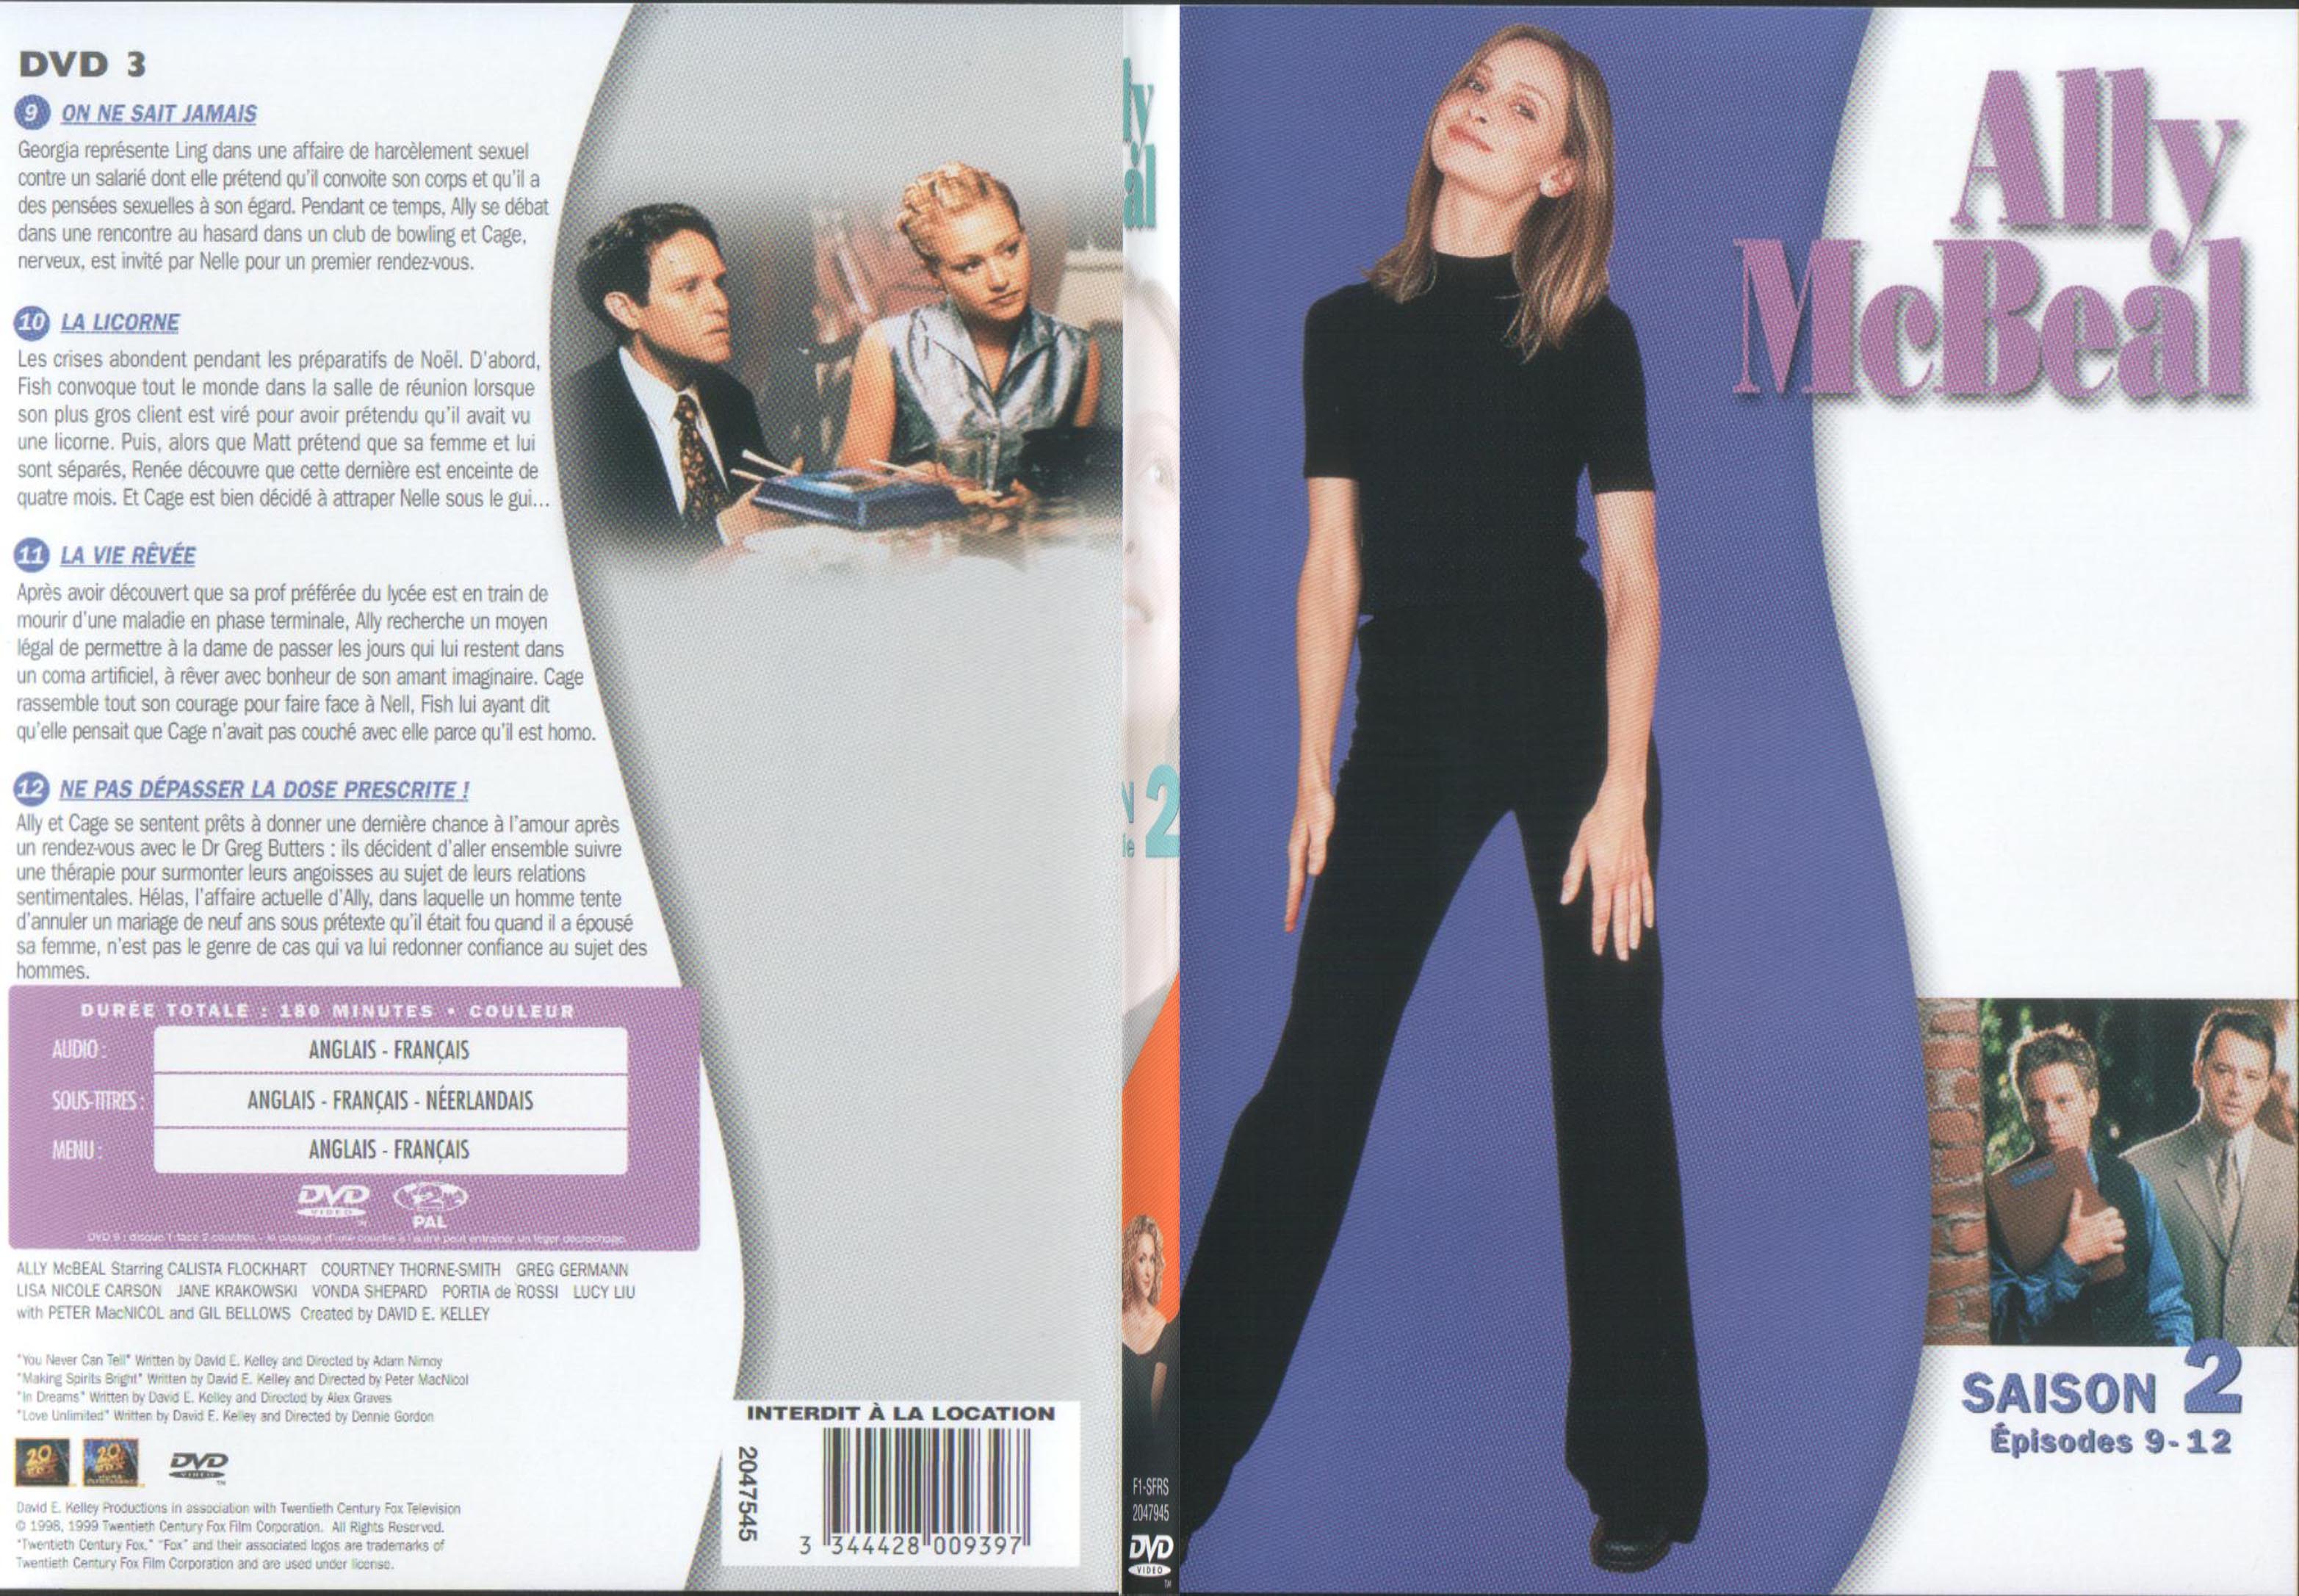 Jaquette DVD Ally McBeal saison 2 dvd 3 - SLIM